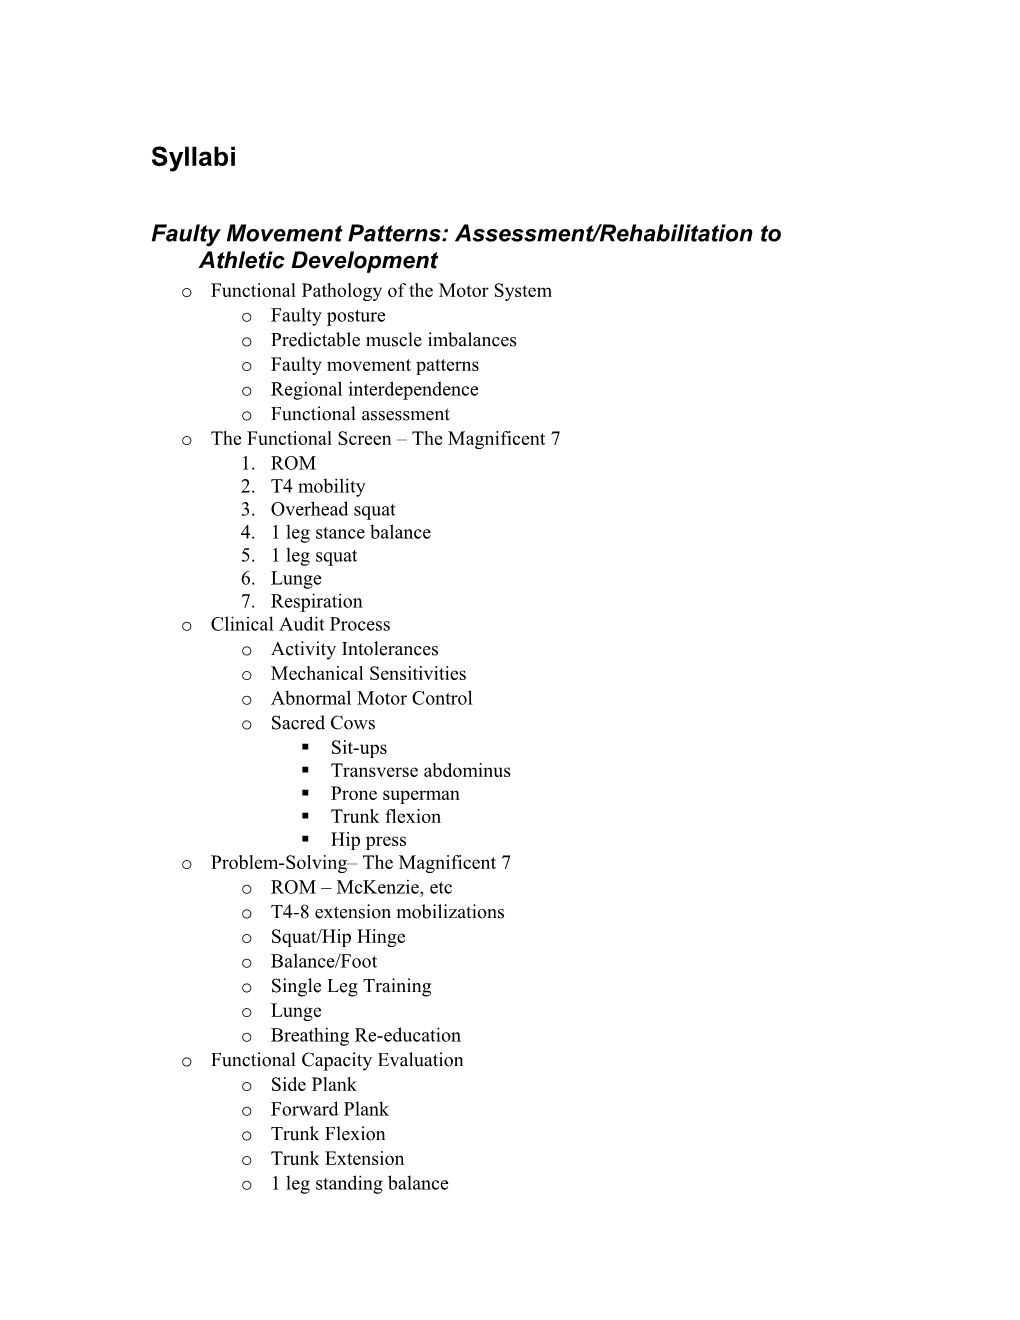 Faulty Movement Patterns: Assessment/Rehabilitation to Athletic Development